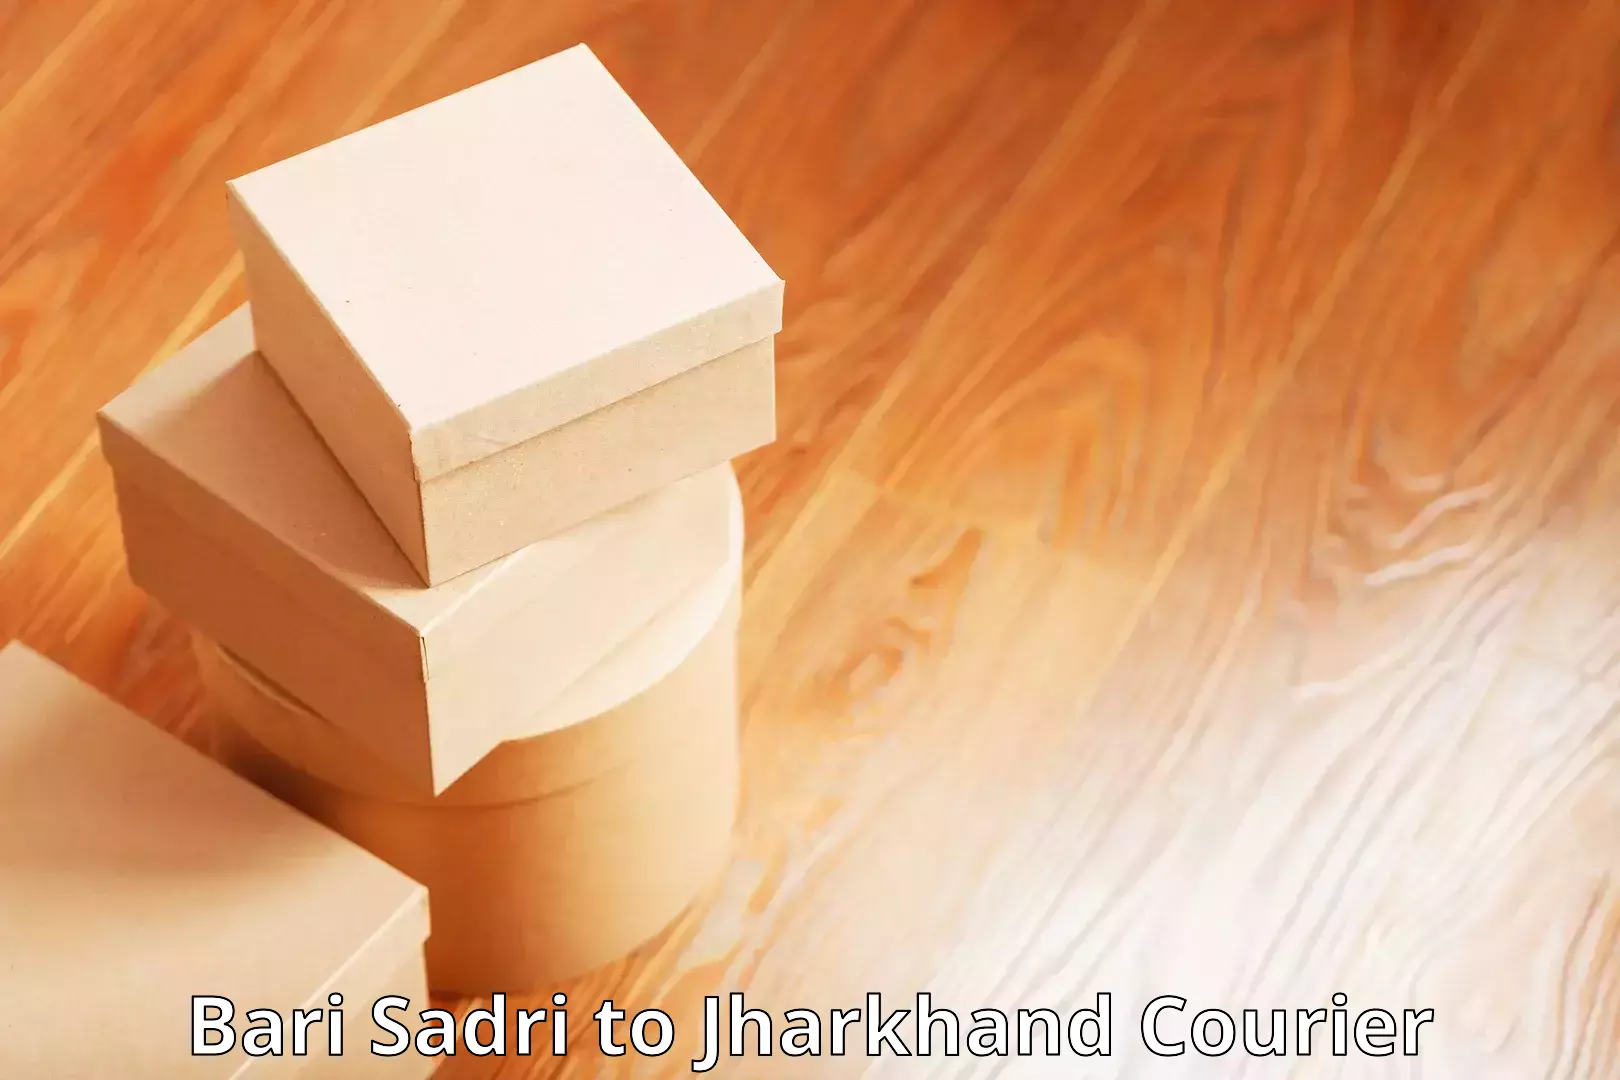 Express delivery capabilities Bari Sadri to Ramgarh